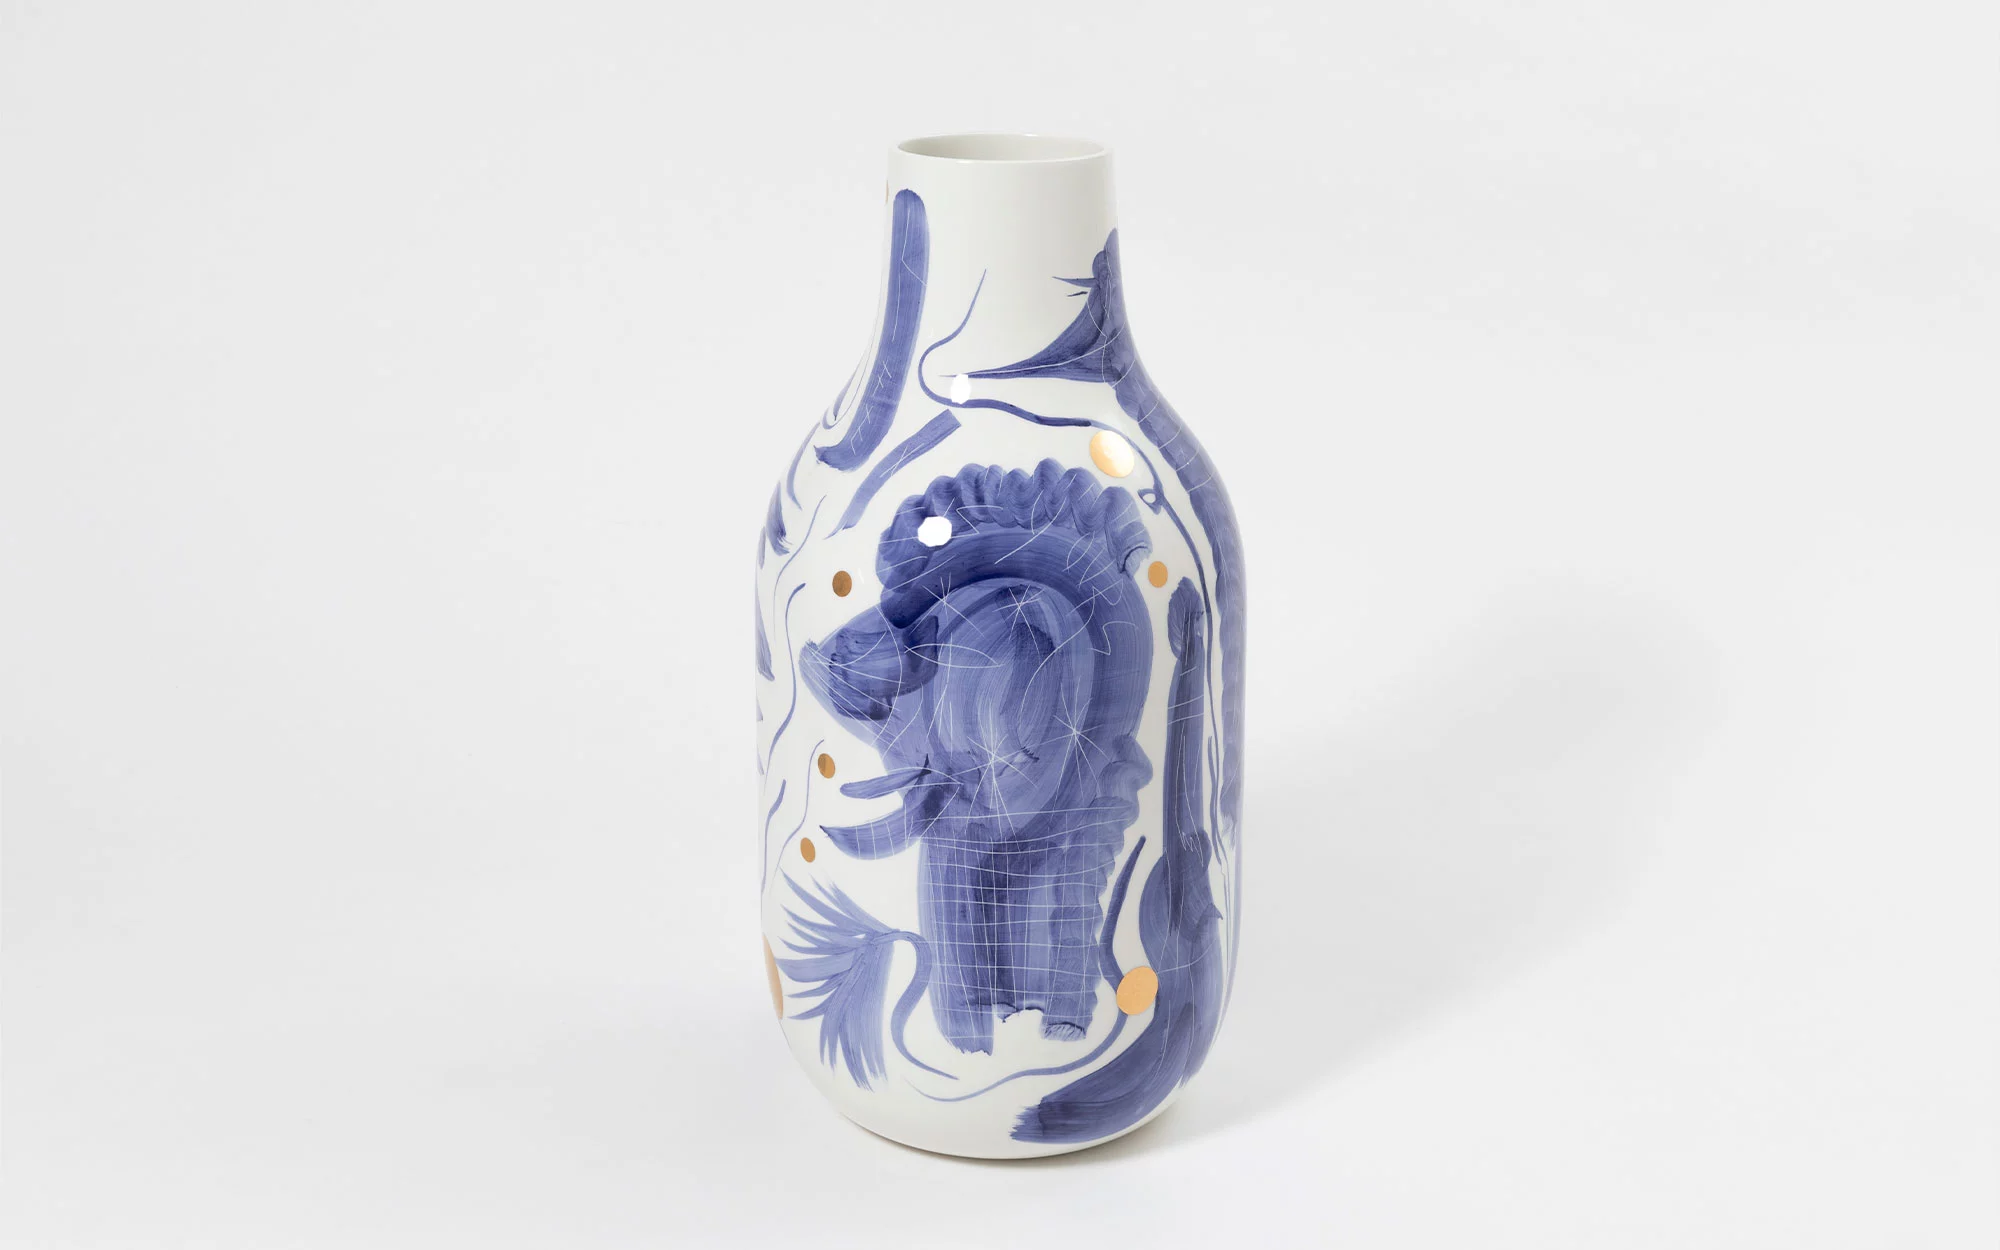 Chromatico Vase - Jaime Hayon - Mirror - Galerie kreo